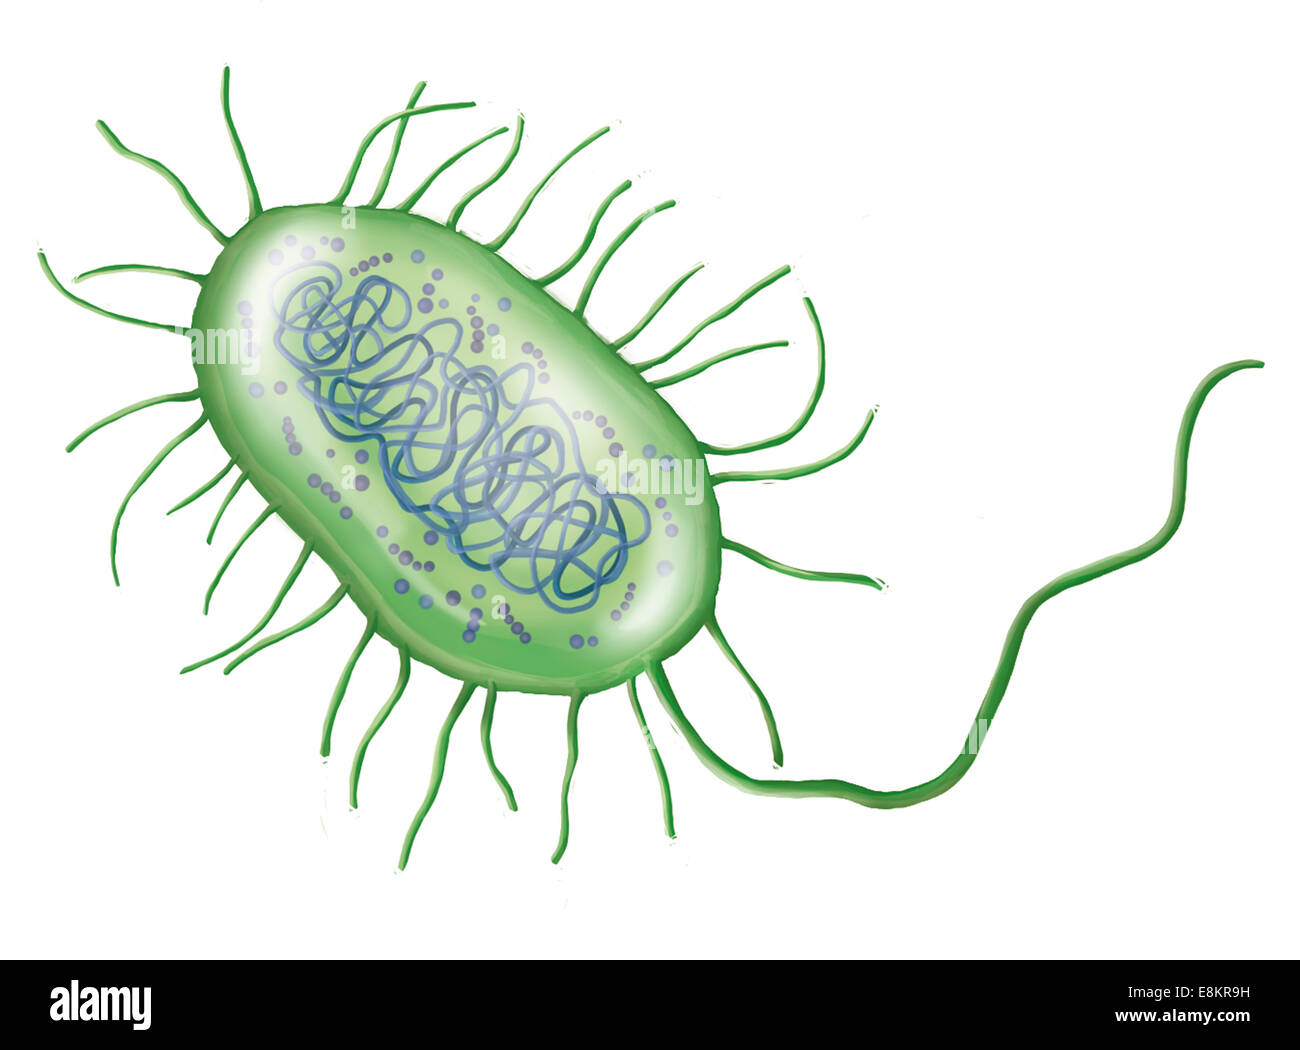 Bacteria comensal fotografías e imágenes de alta resolución - Alamy